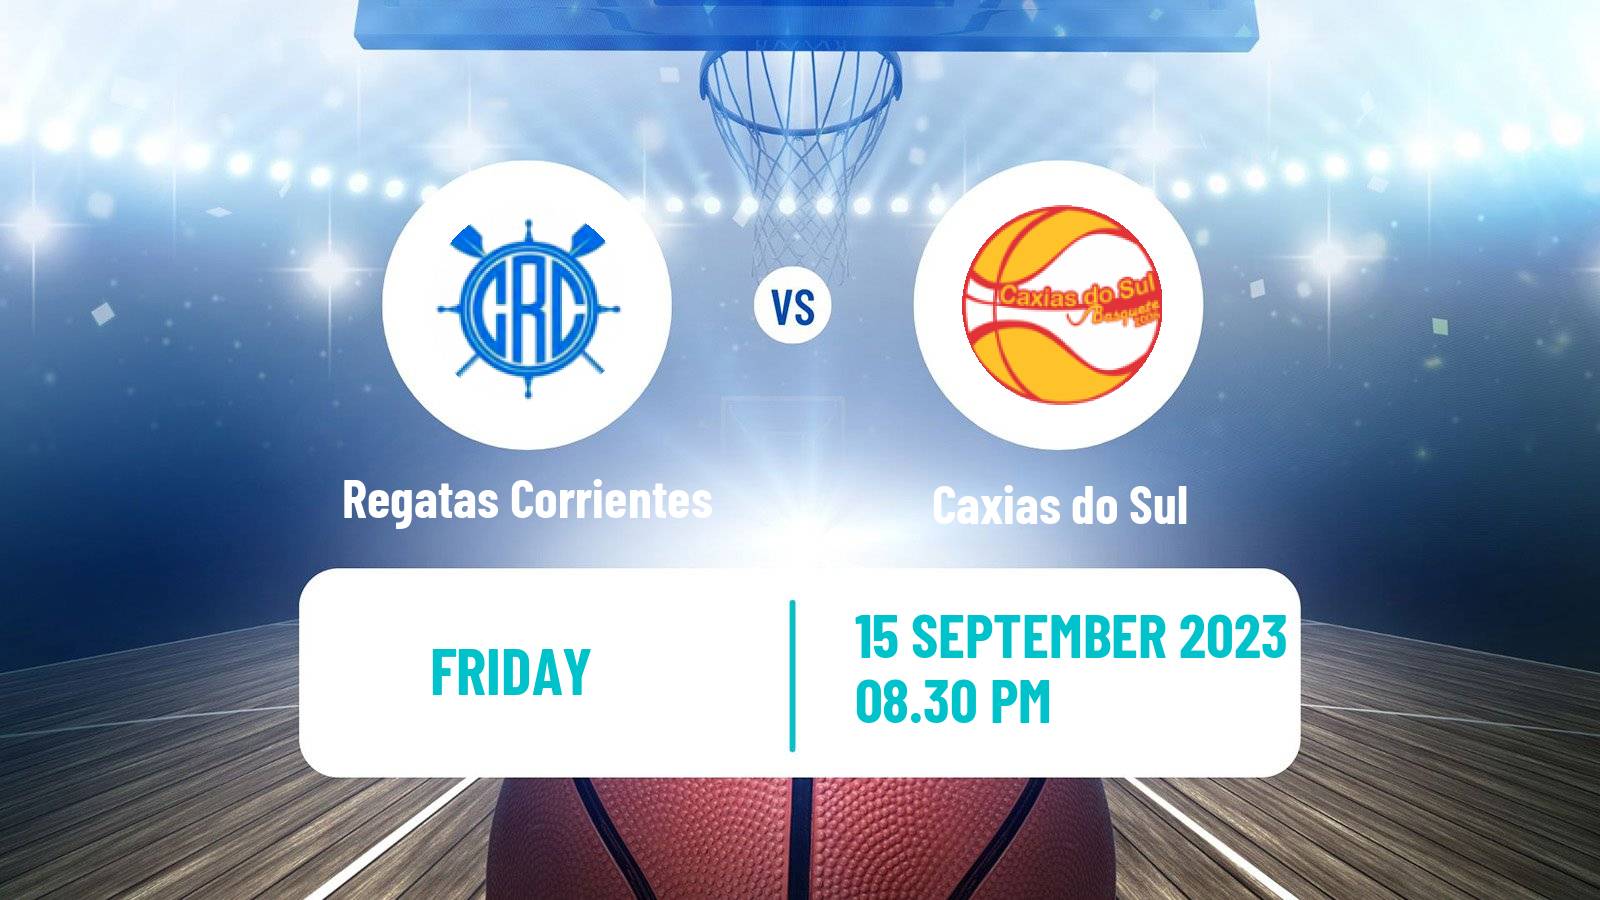 Basketball Club Friendly Basketball Regatas Corrientes - Caxias do Sul